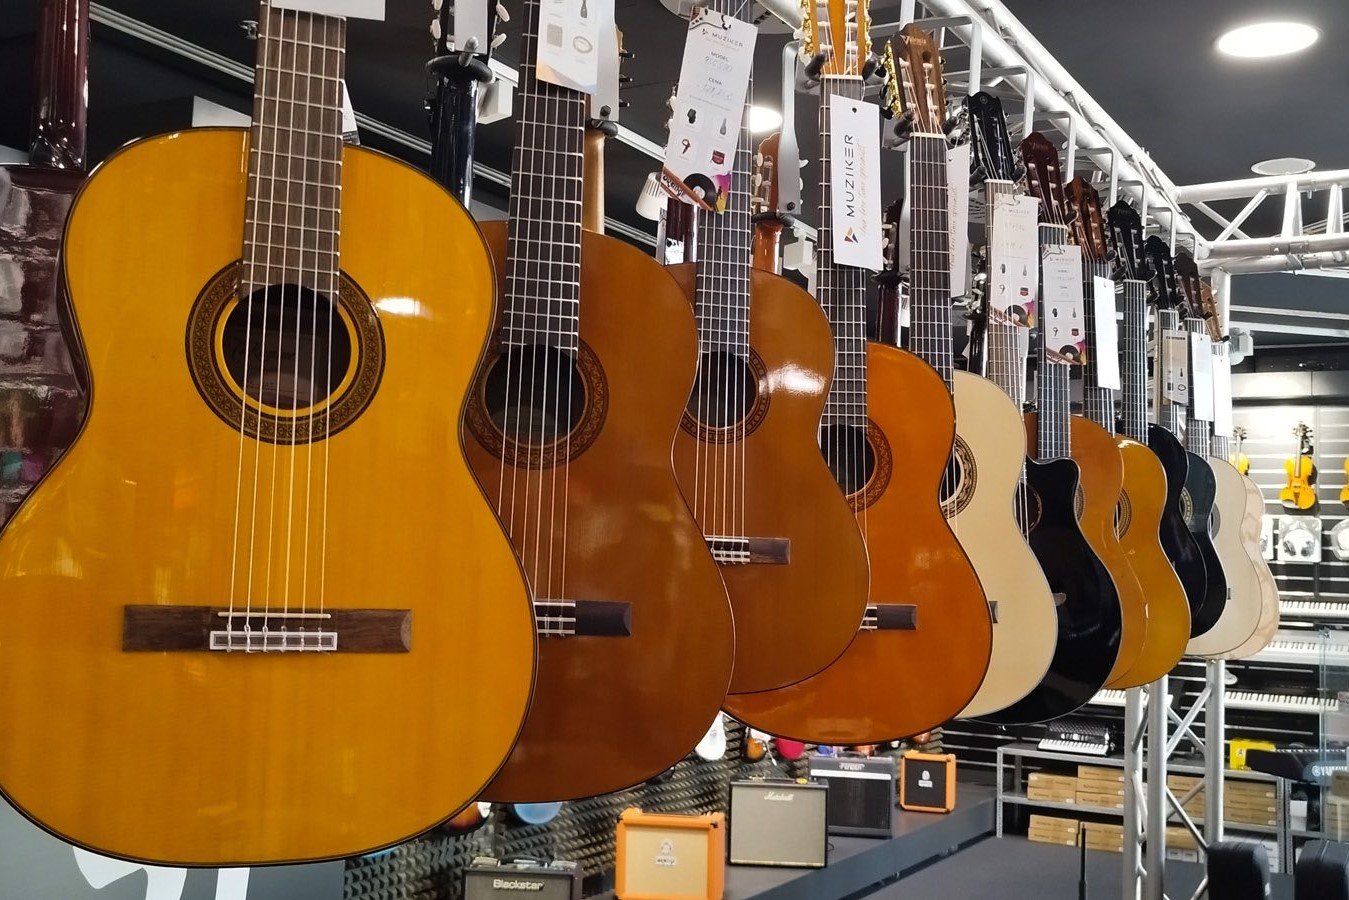 Guitares dans le magasin d'instruments de musique Muziker Žilina.